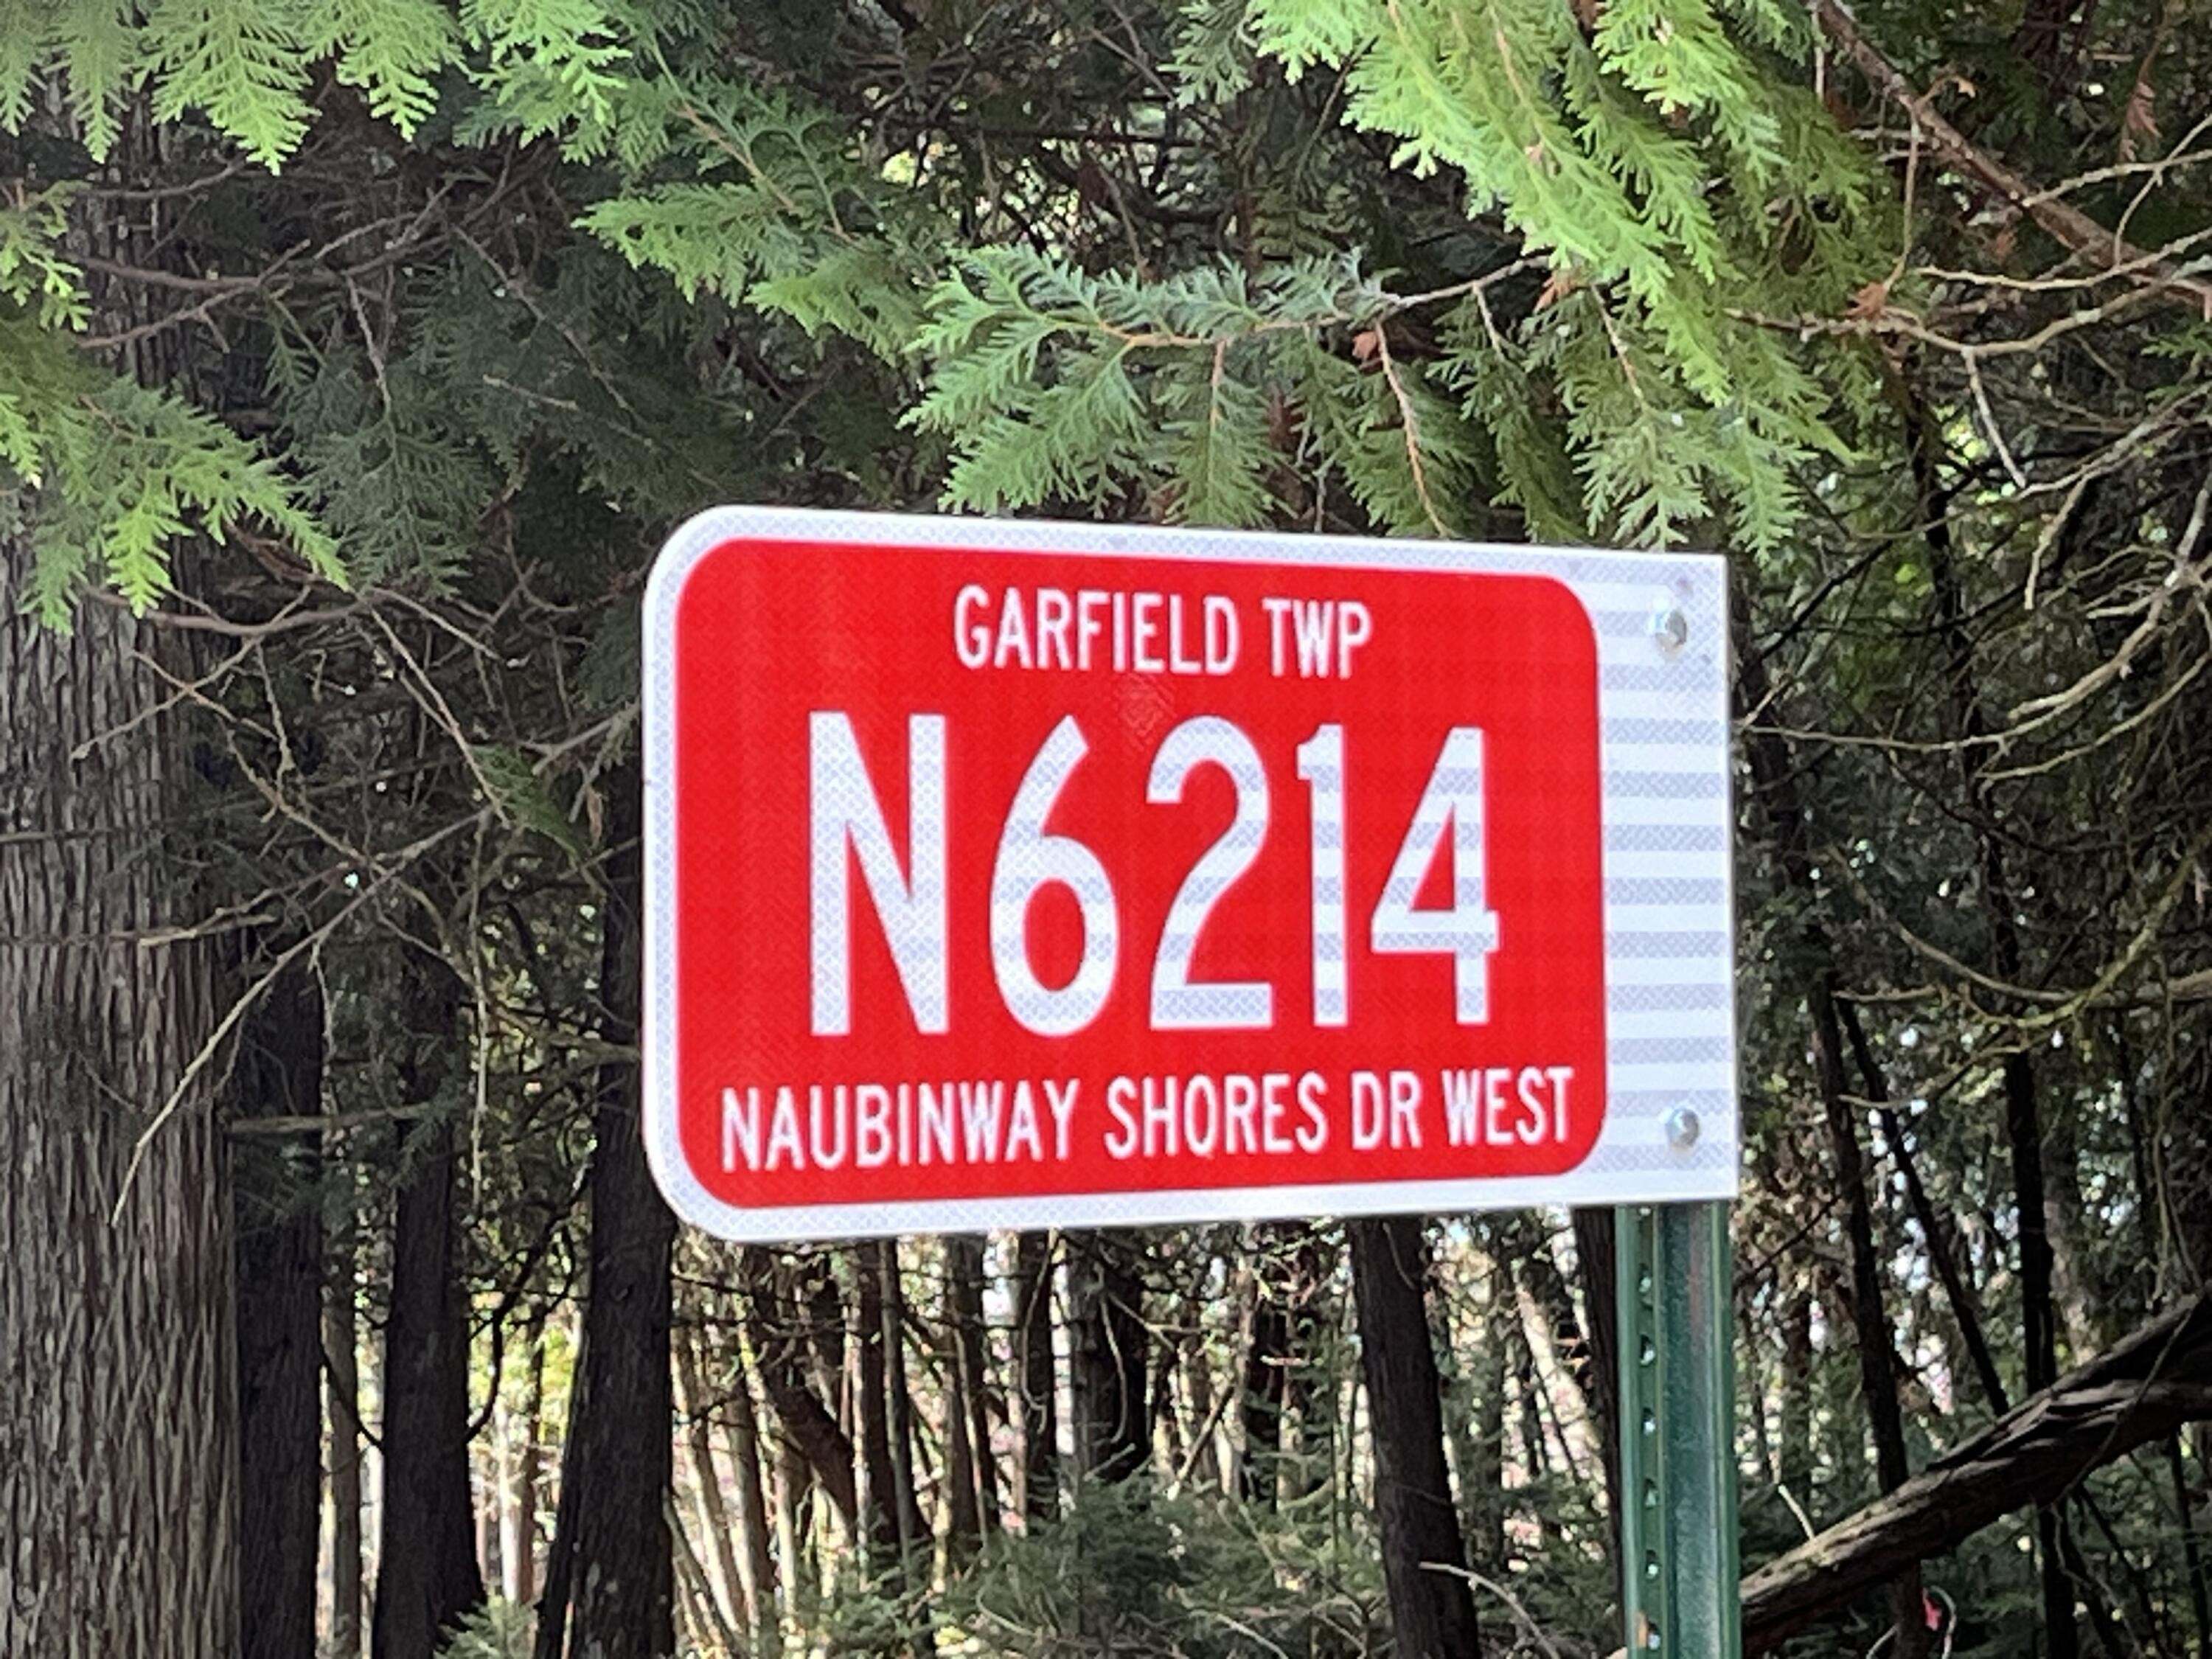 32. N6214 Naubinway Shores Dr West